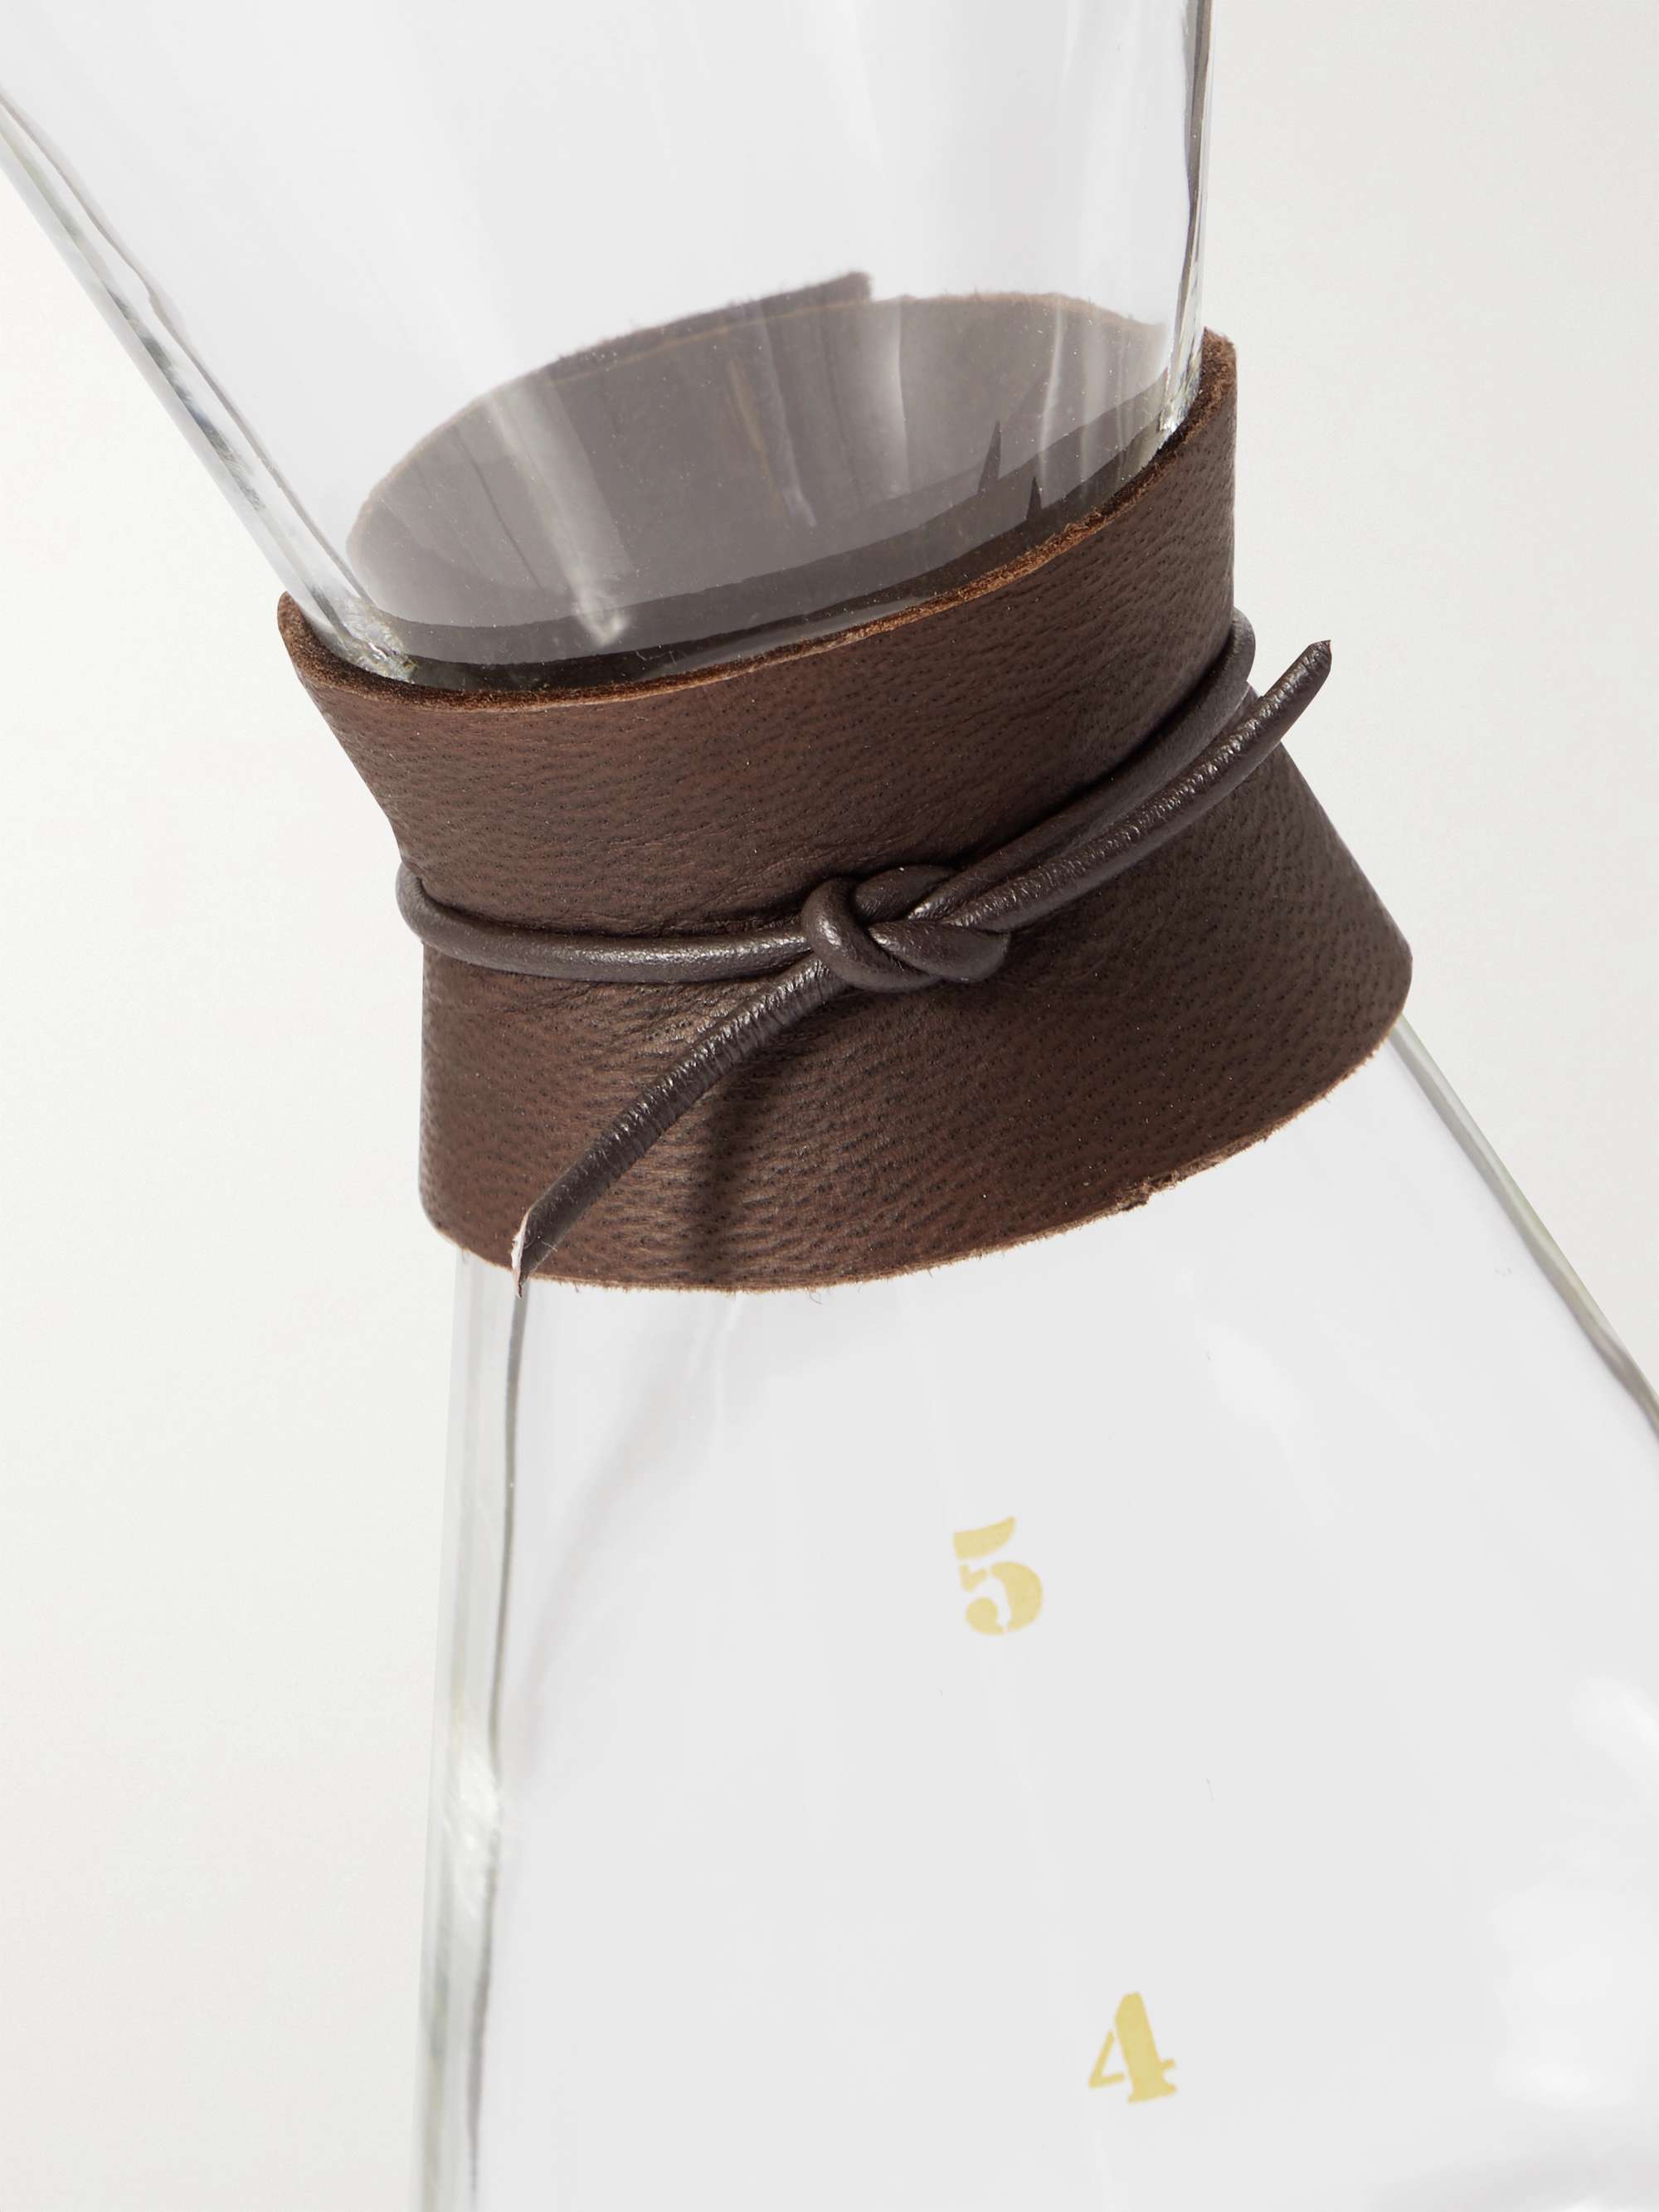 BY JAPAN + Koizumi Glass Minowa 2-Chome Glass and Leather Coffee Pot